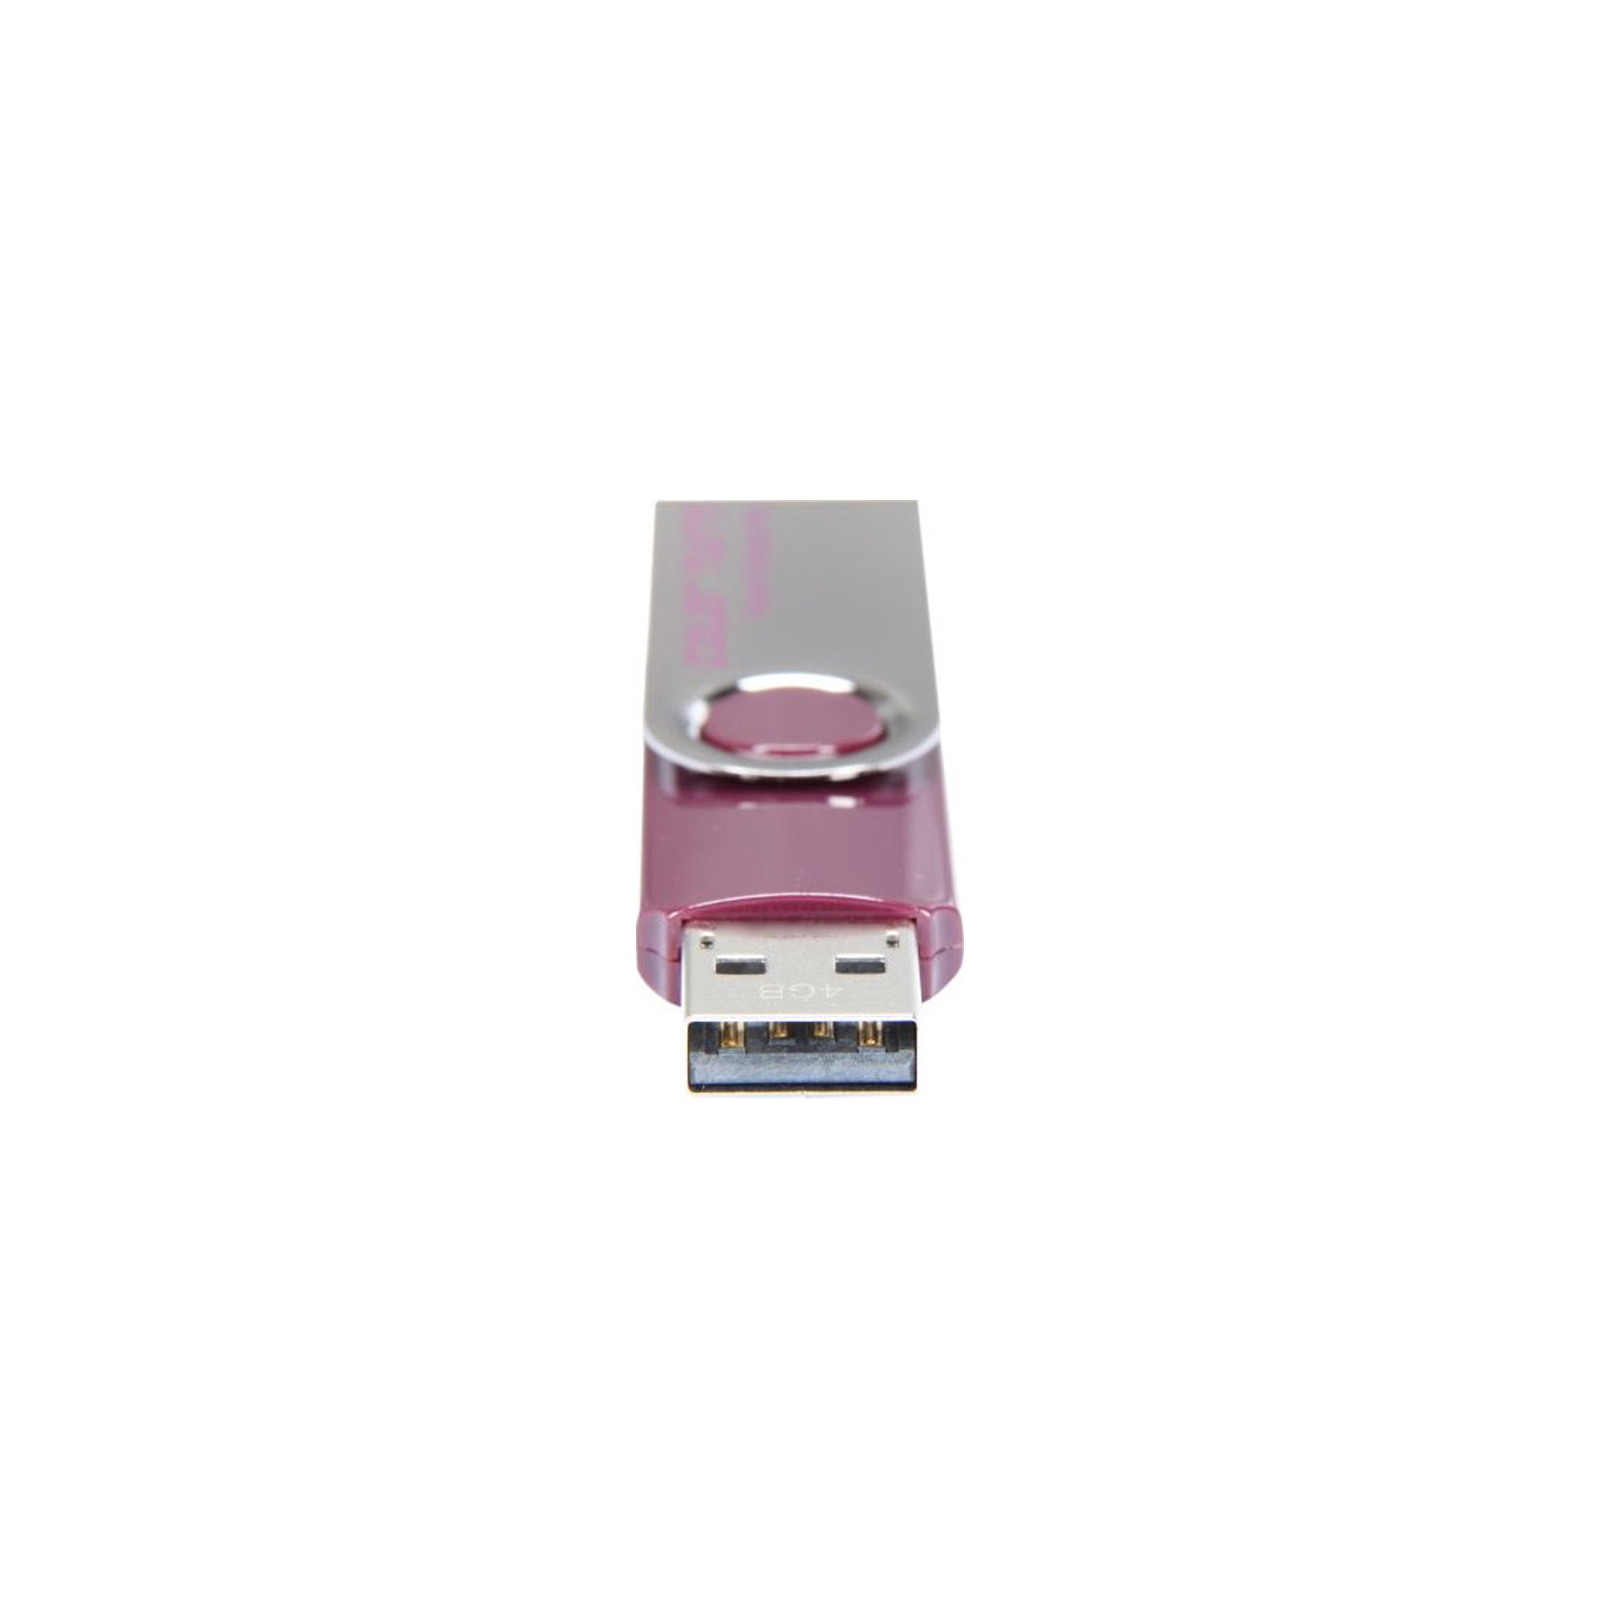 USB флеш накопитель Team 32GB Color Turn Brown USB 2.0 (TE90232GN01) изображение 2